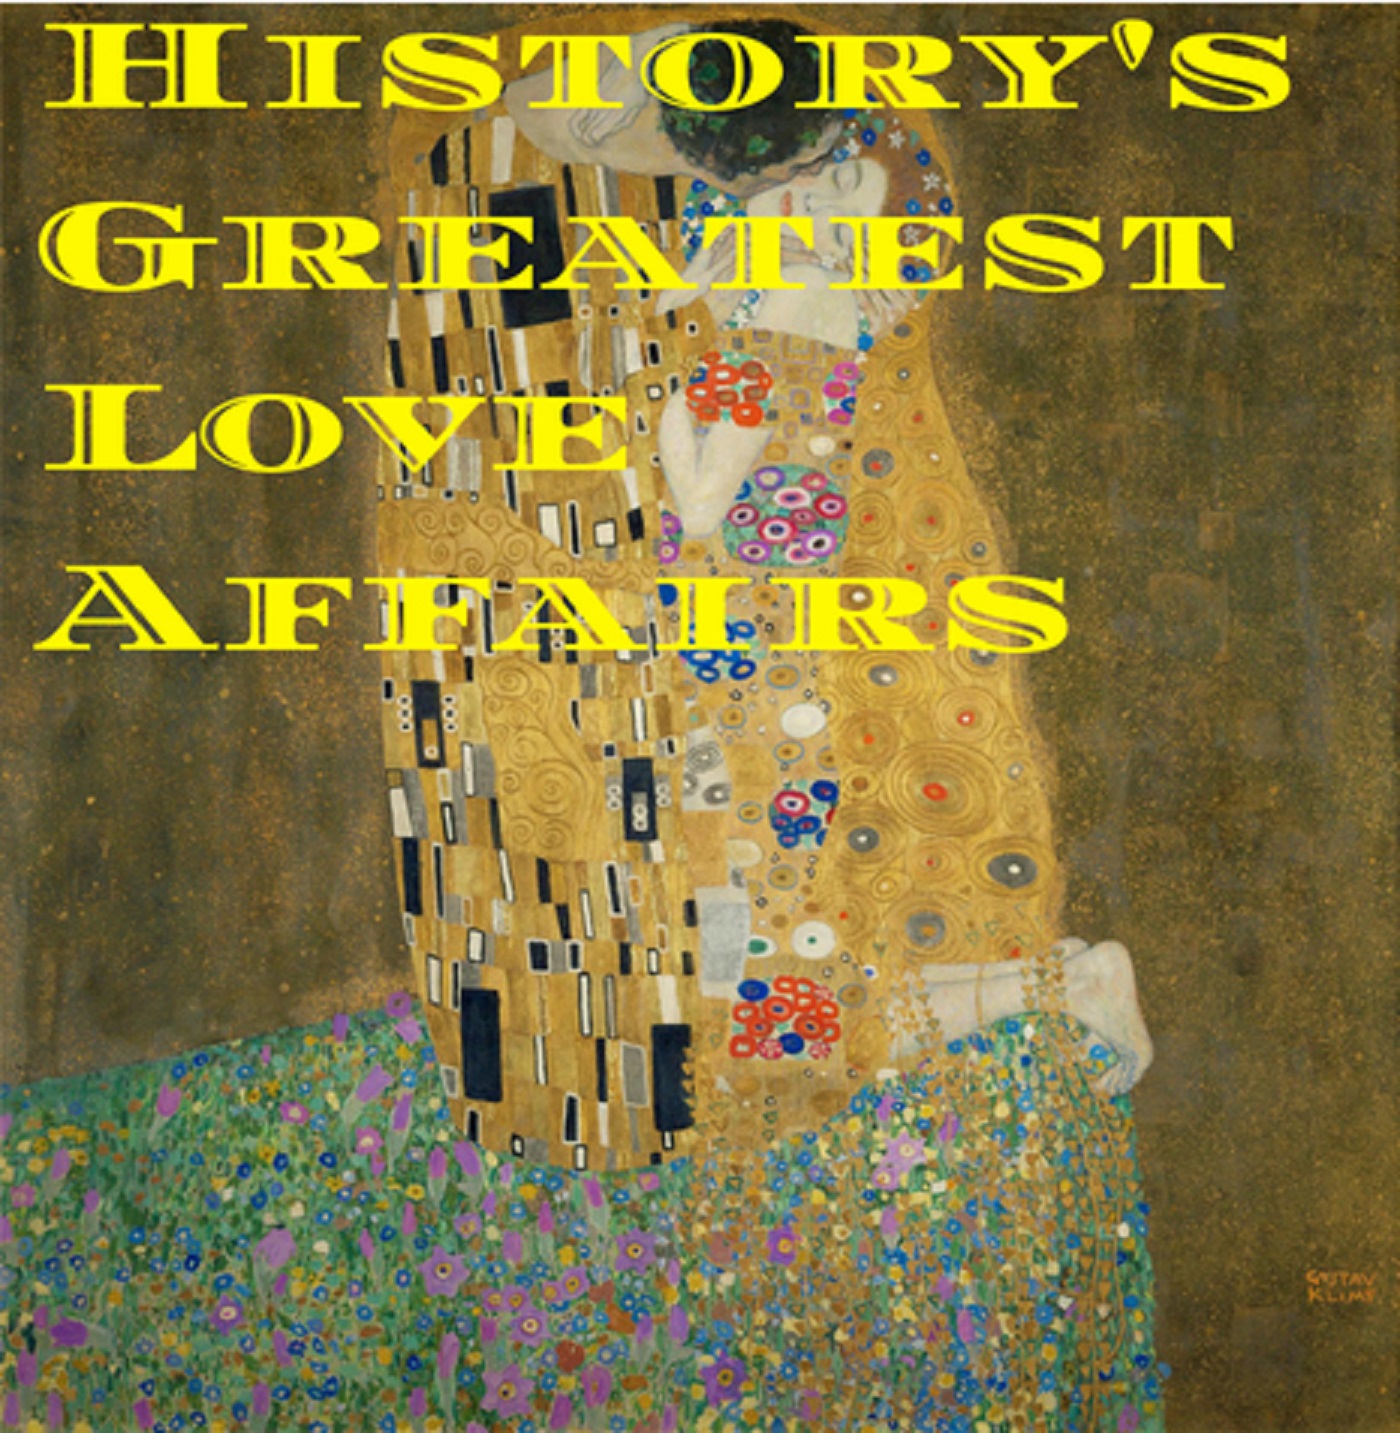 History's Greatest Love Affairs